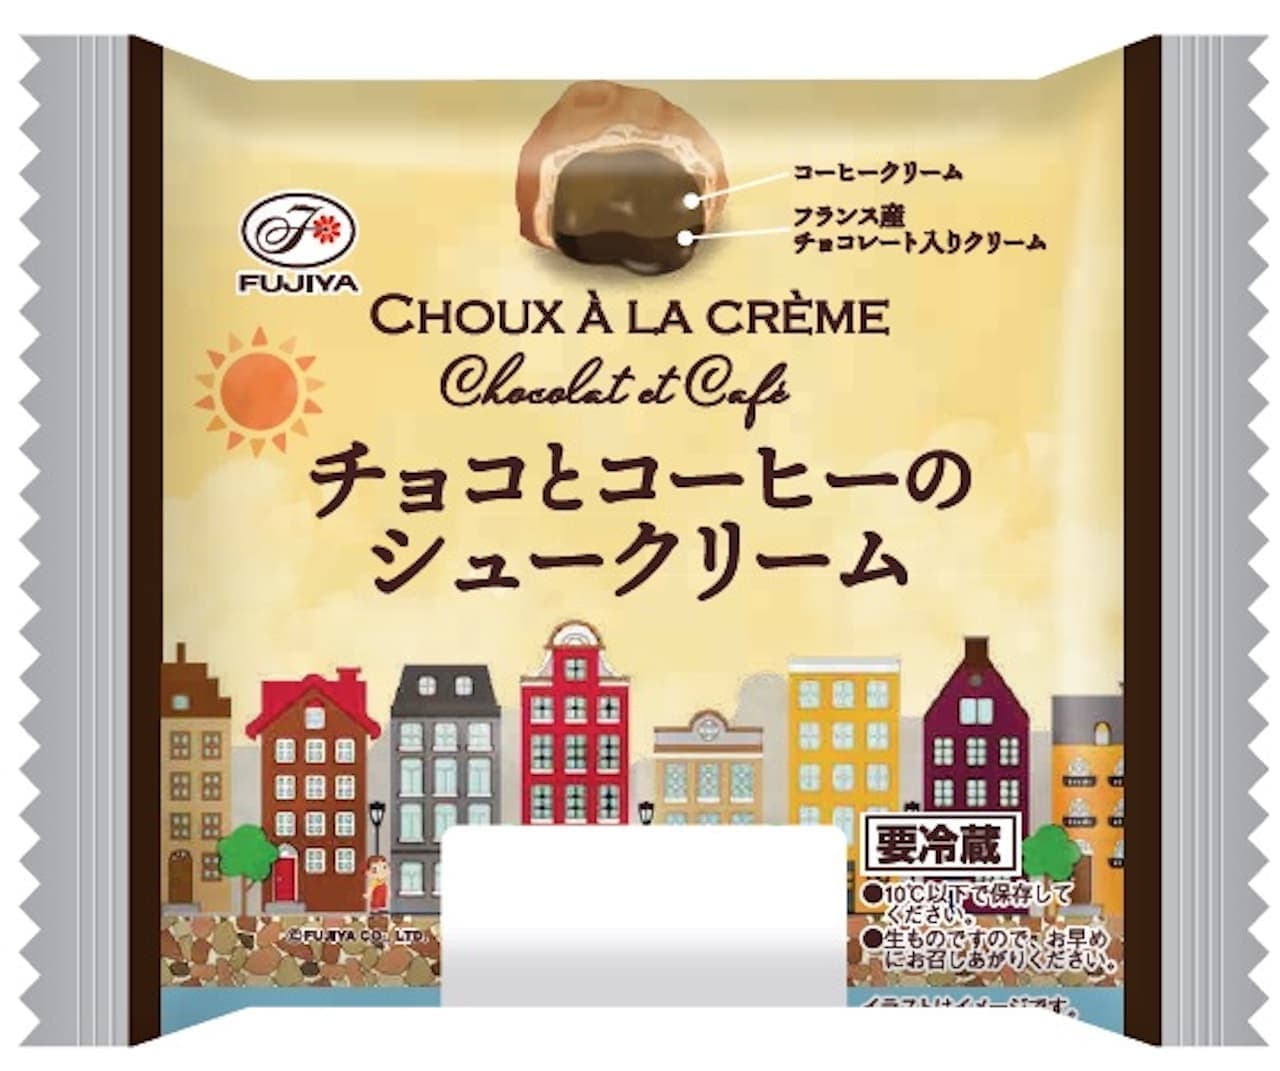 Aeon "Chocolate and Coffee Cream Puffs"